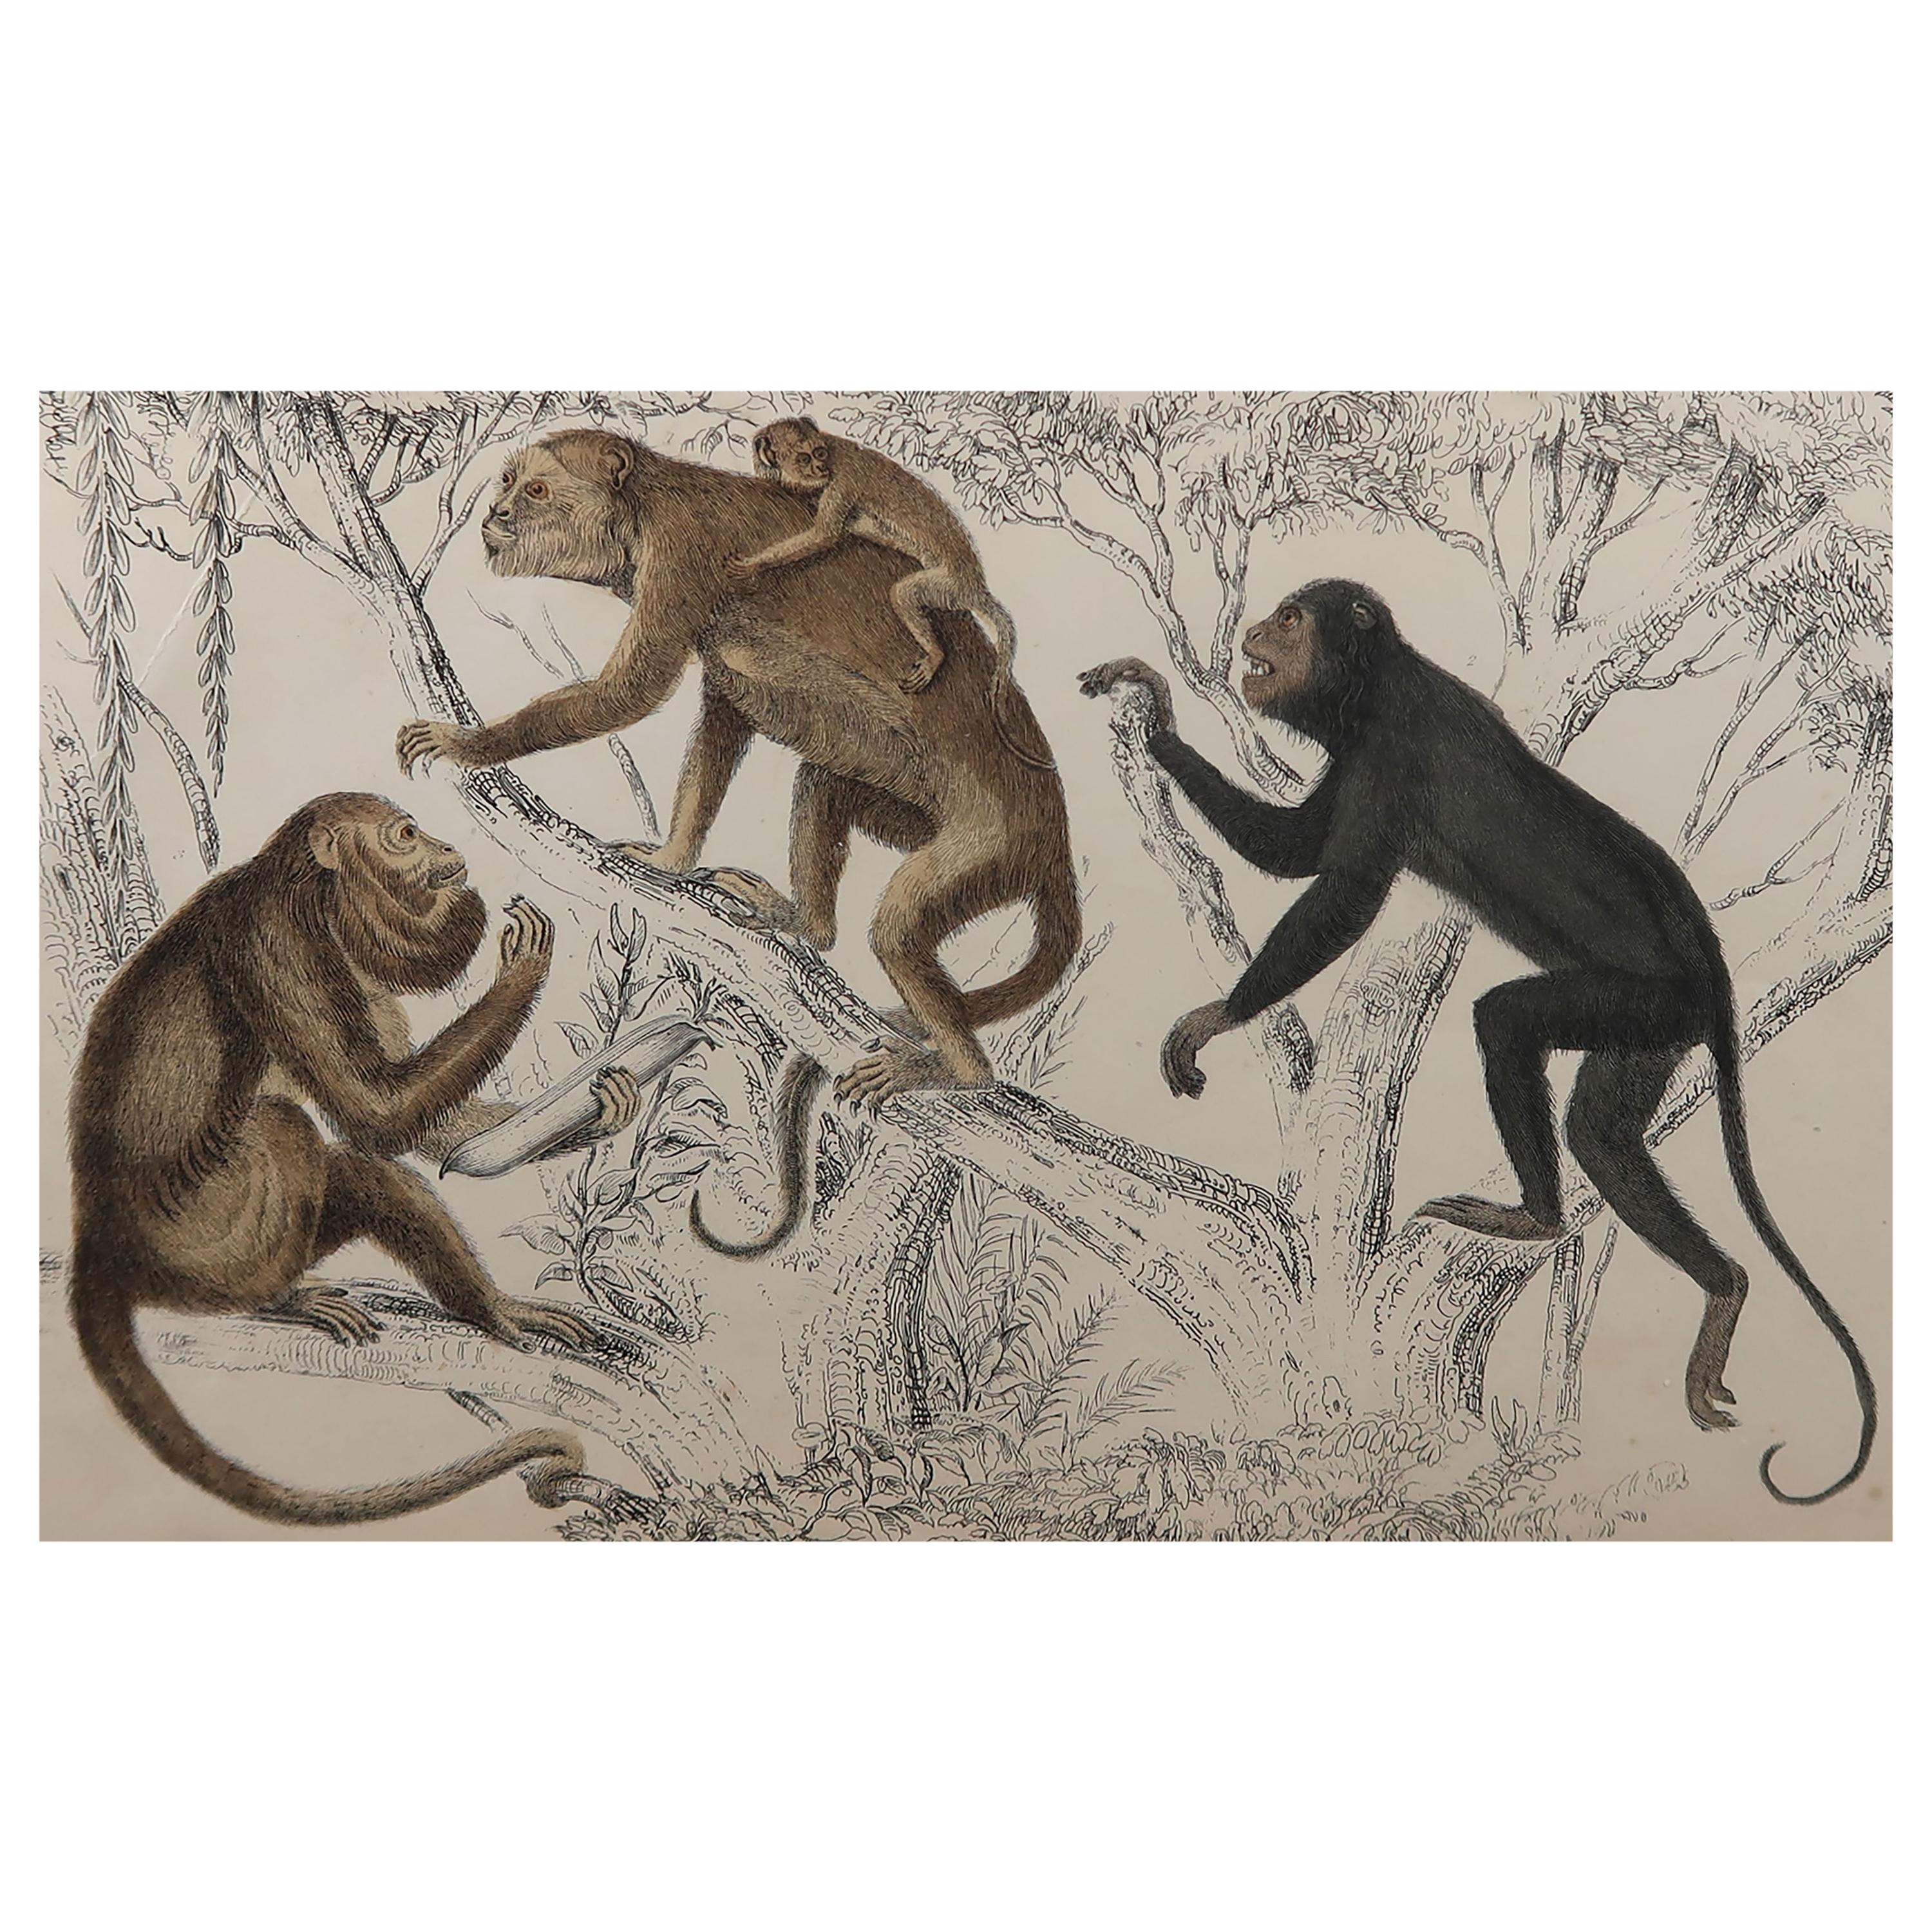 Original Antique Print of Monkeys, 1847 'Unframed'